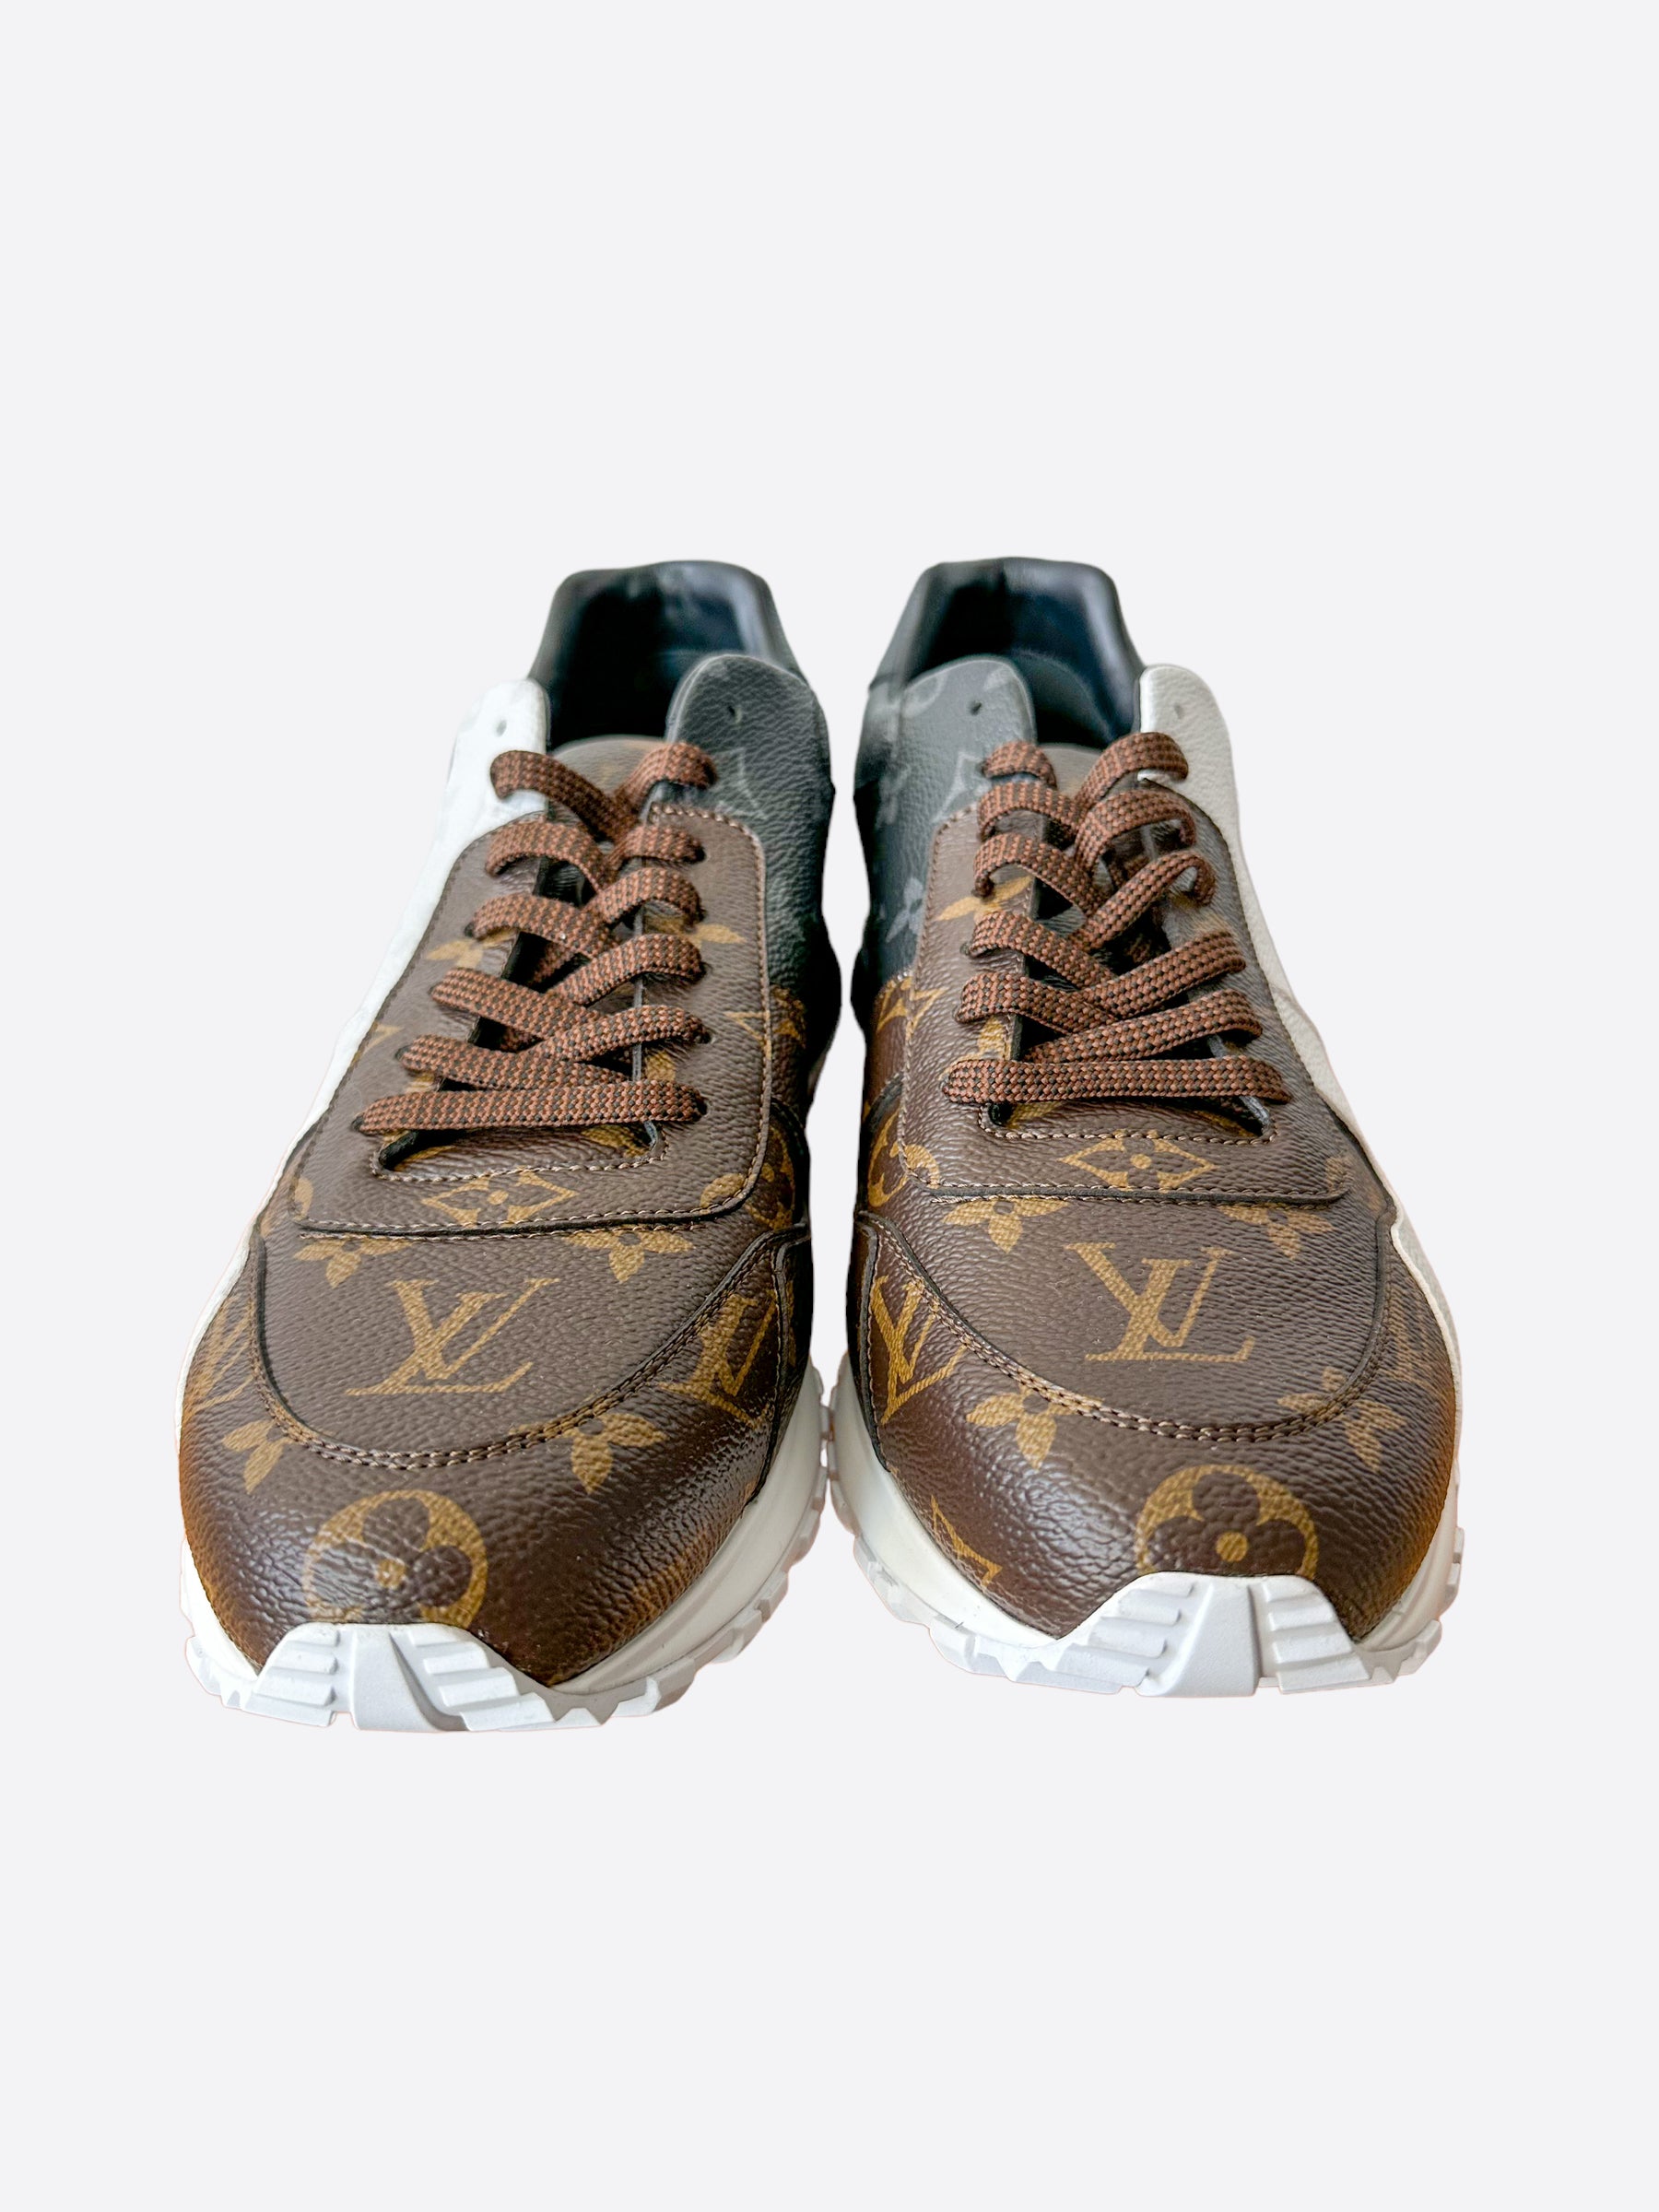 Louis Vuitton Runaway Monogram Sneakers